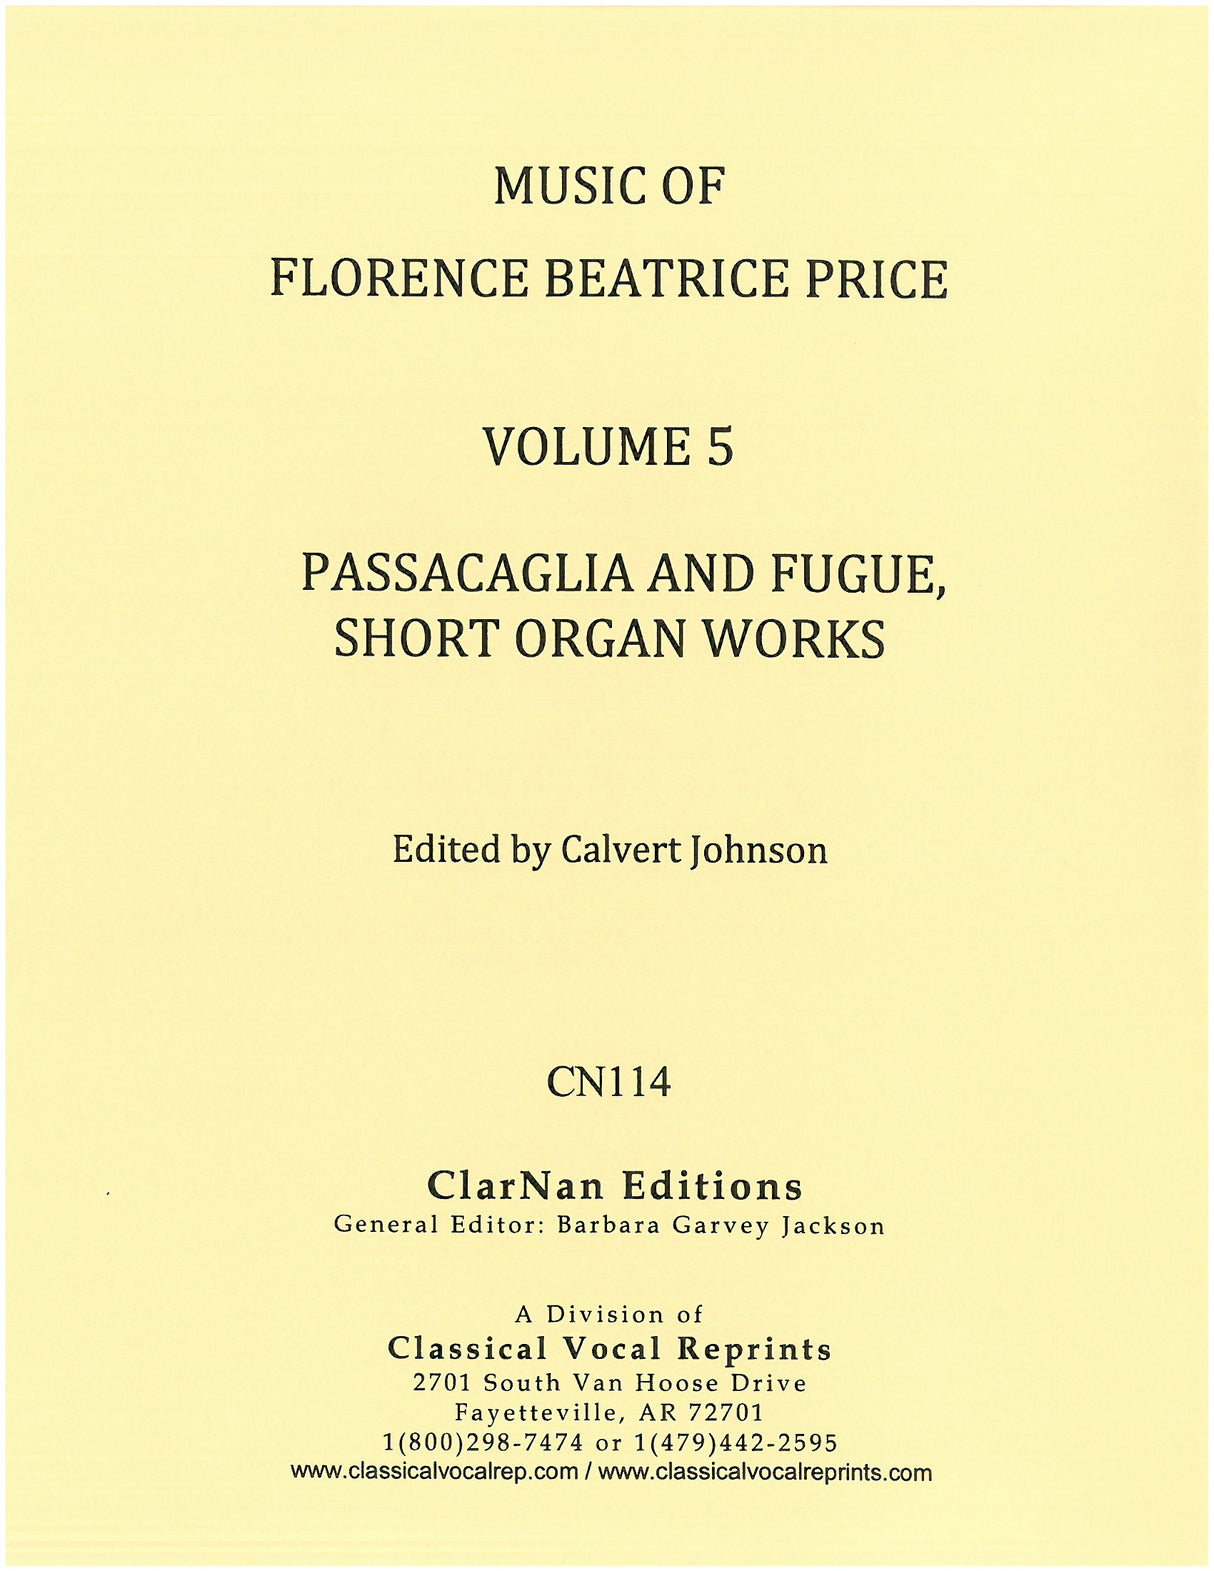 Price: Passacaglia and Fugue; Short Organ Works